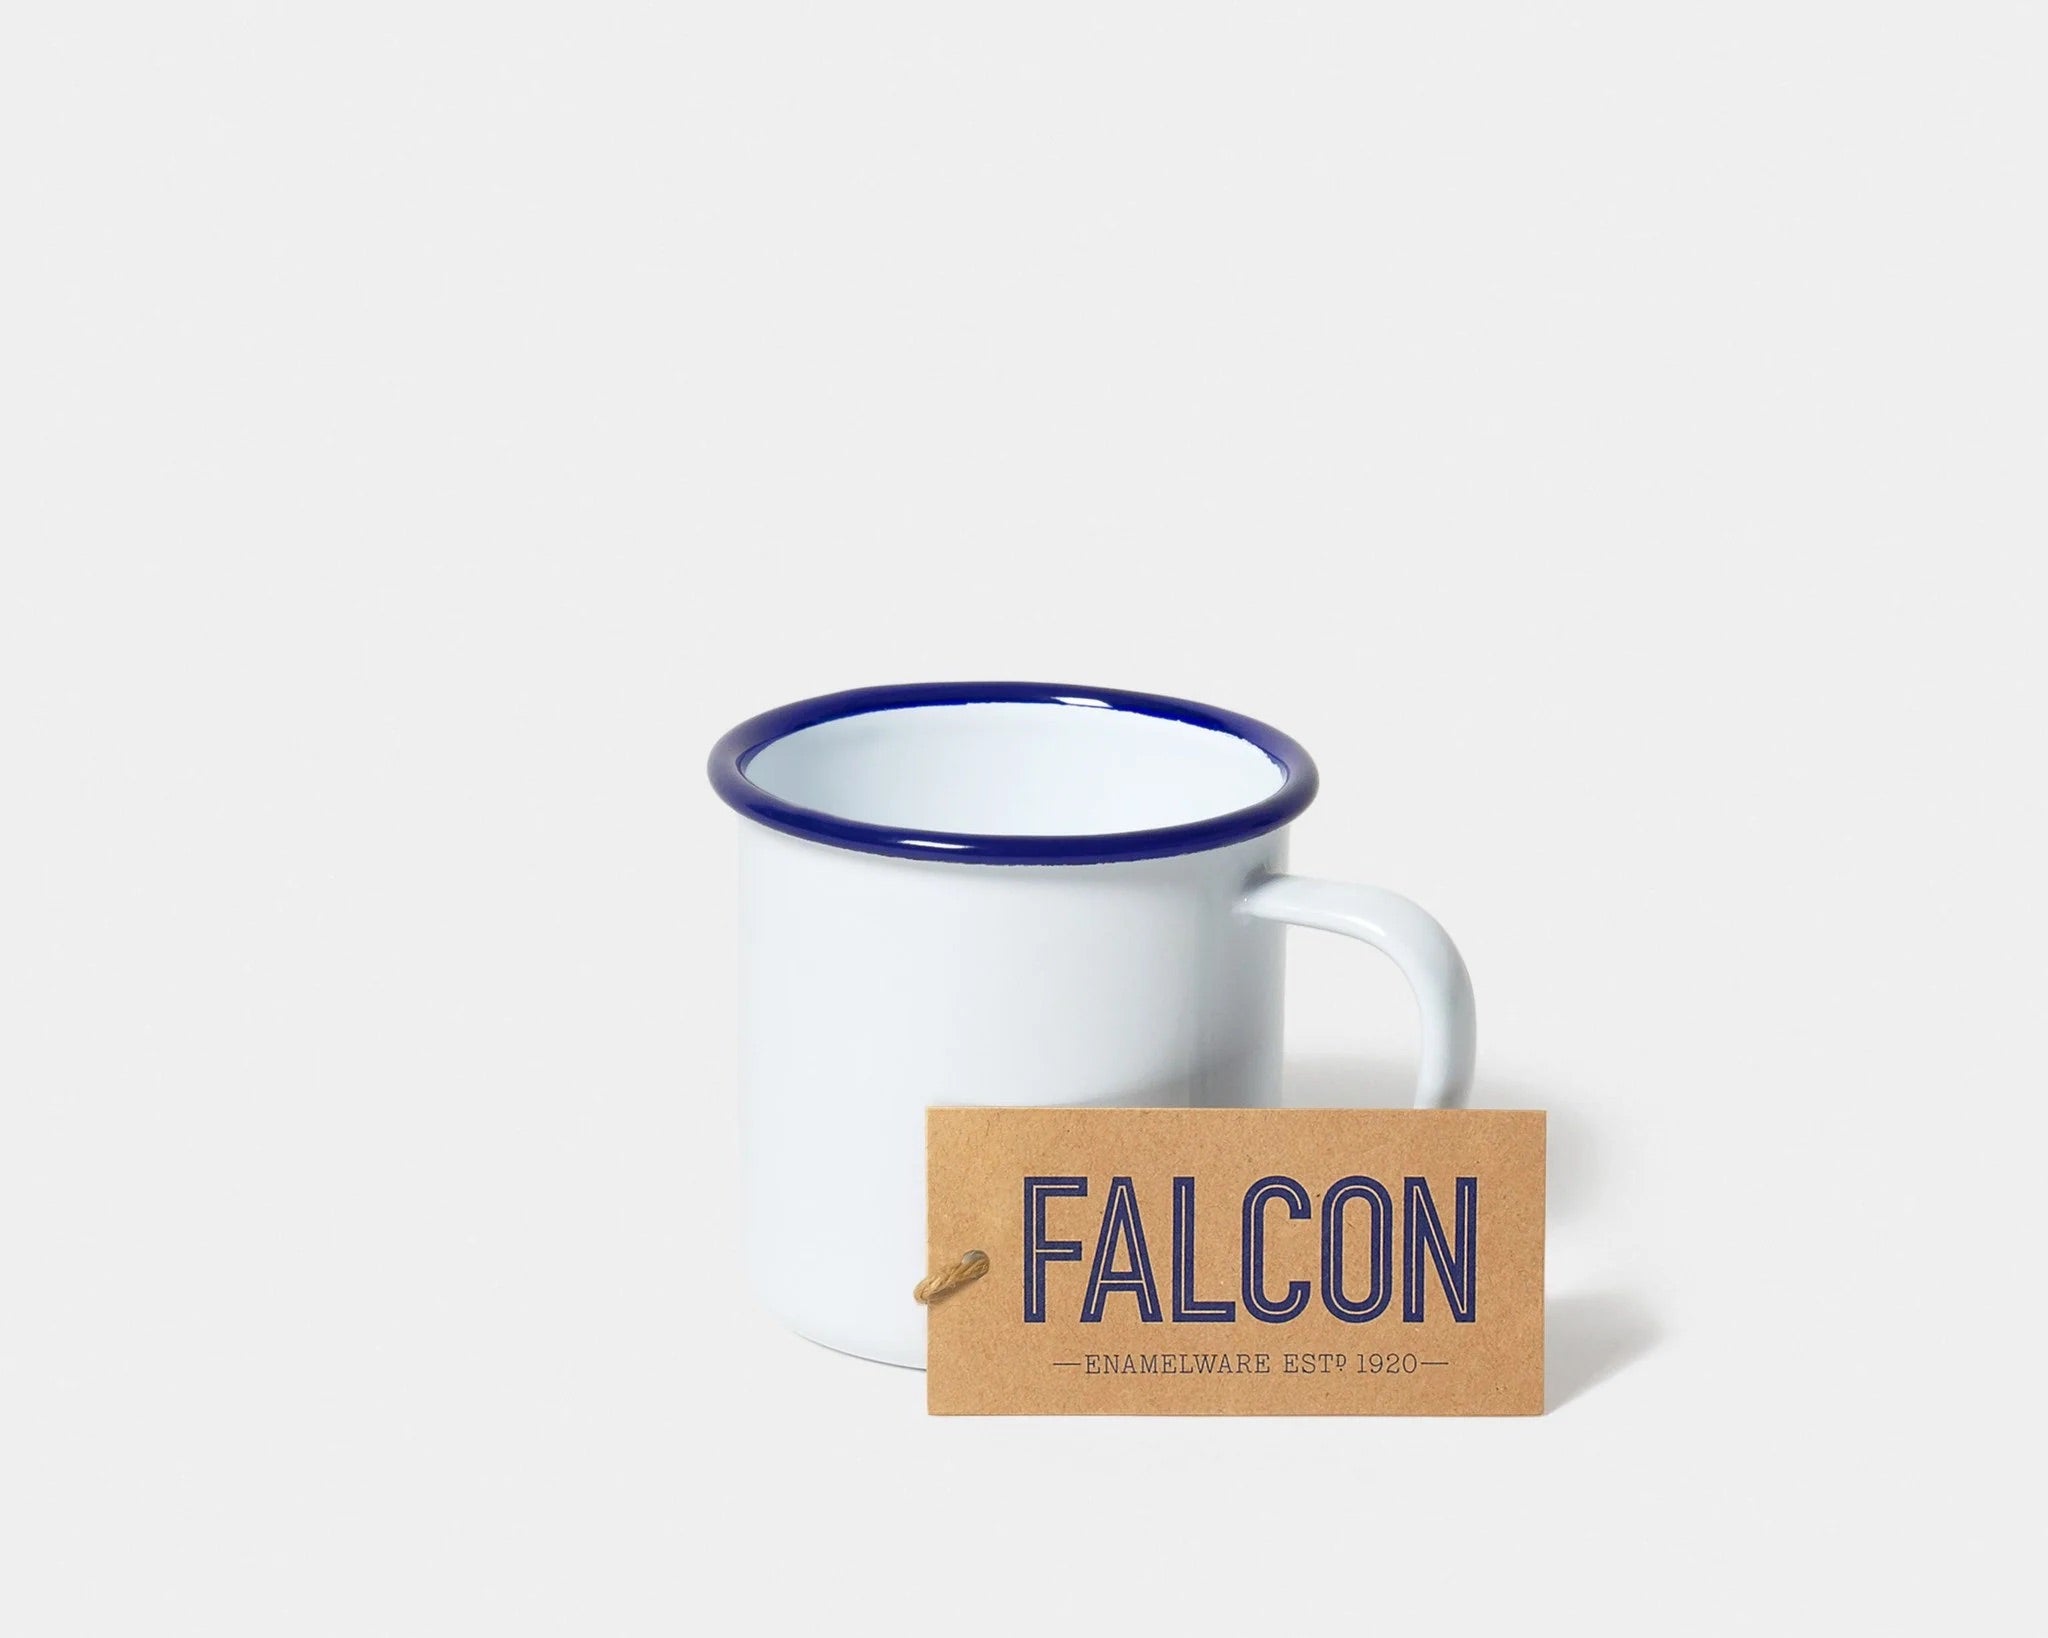  Falcon Enamel Mug - White with Blue rim#colour_white-with-blue-rim